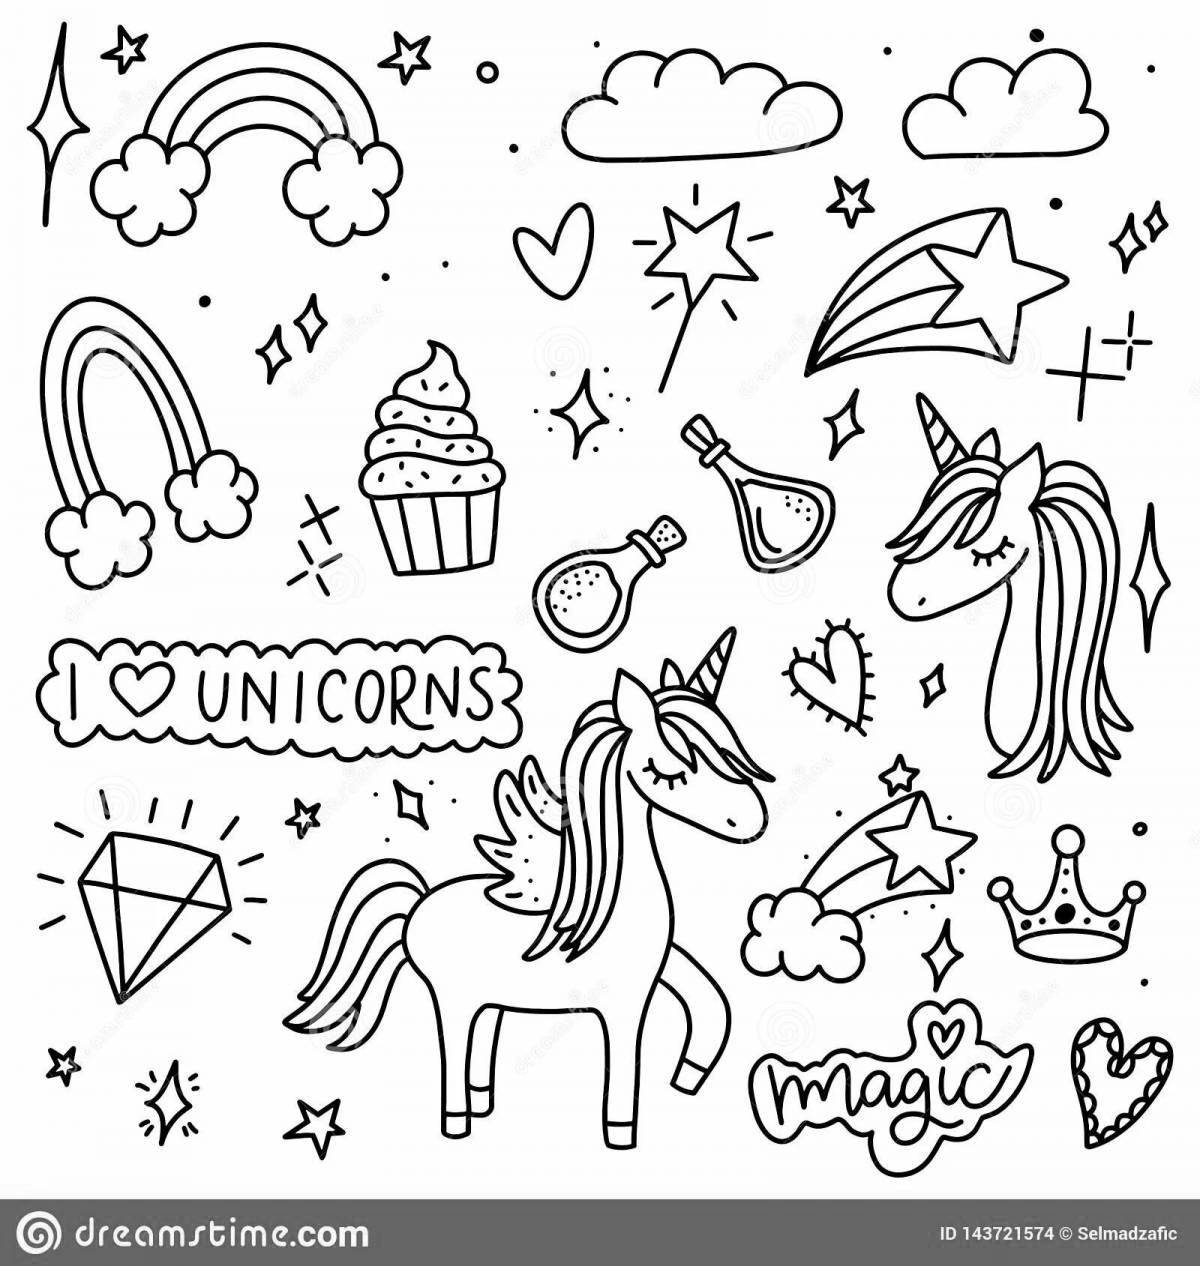 Mystical coloring of many unicorns